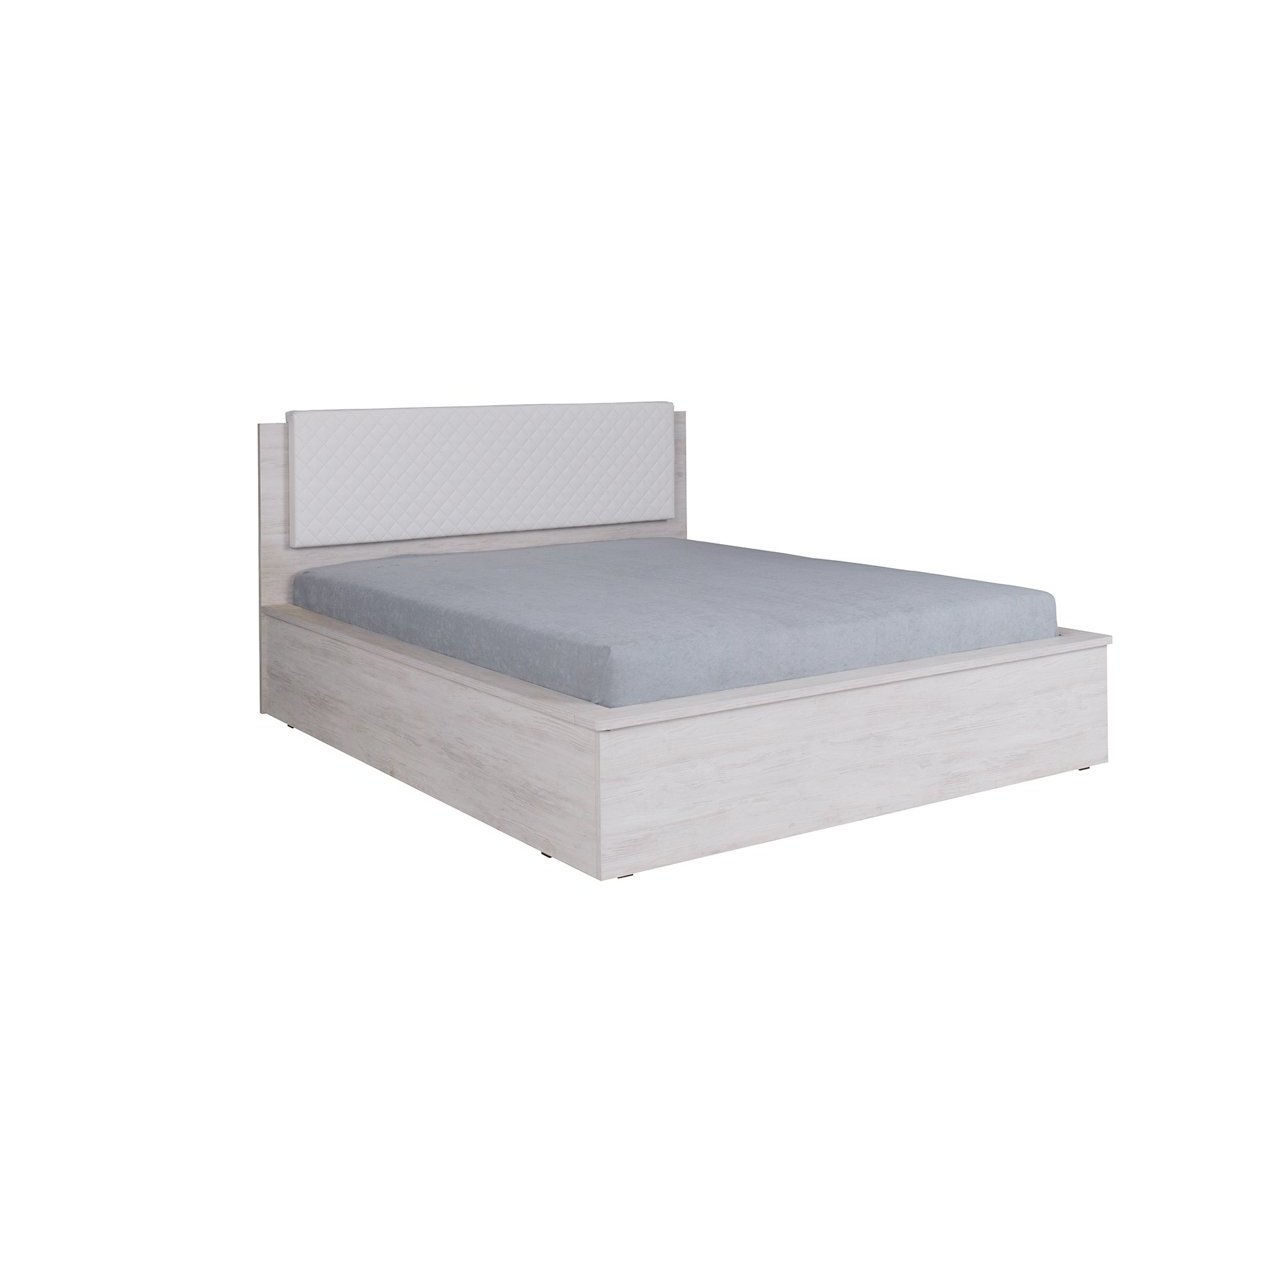 Denver 06 Bed 160cm with Storage - White Oak / White Gloss 160 x 200cm